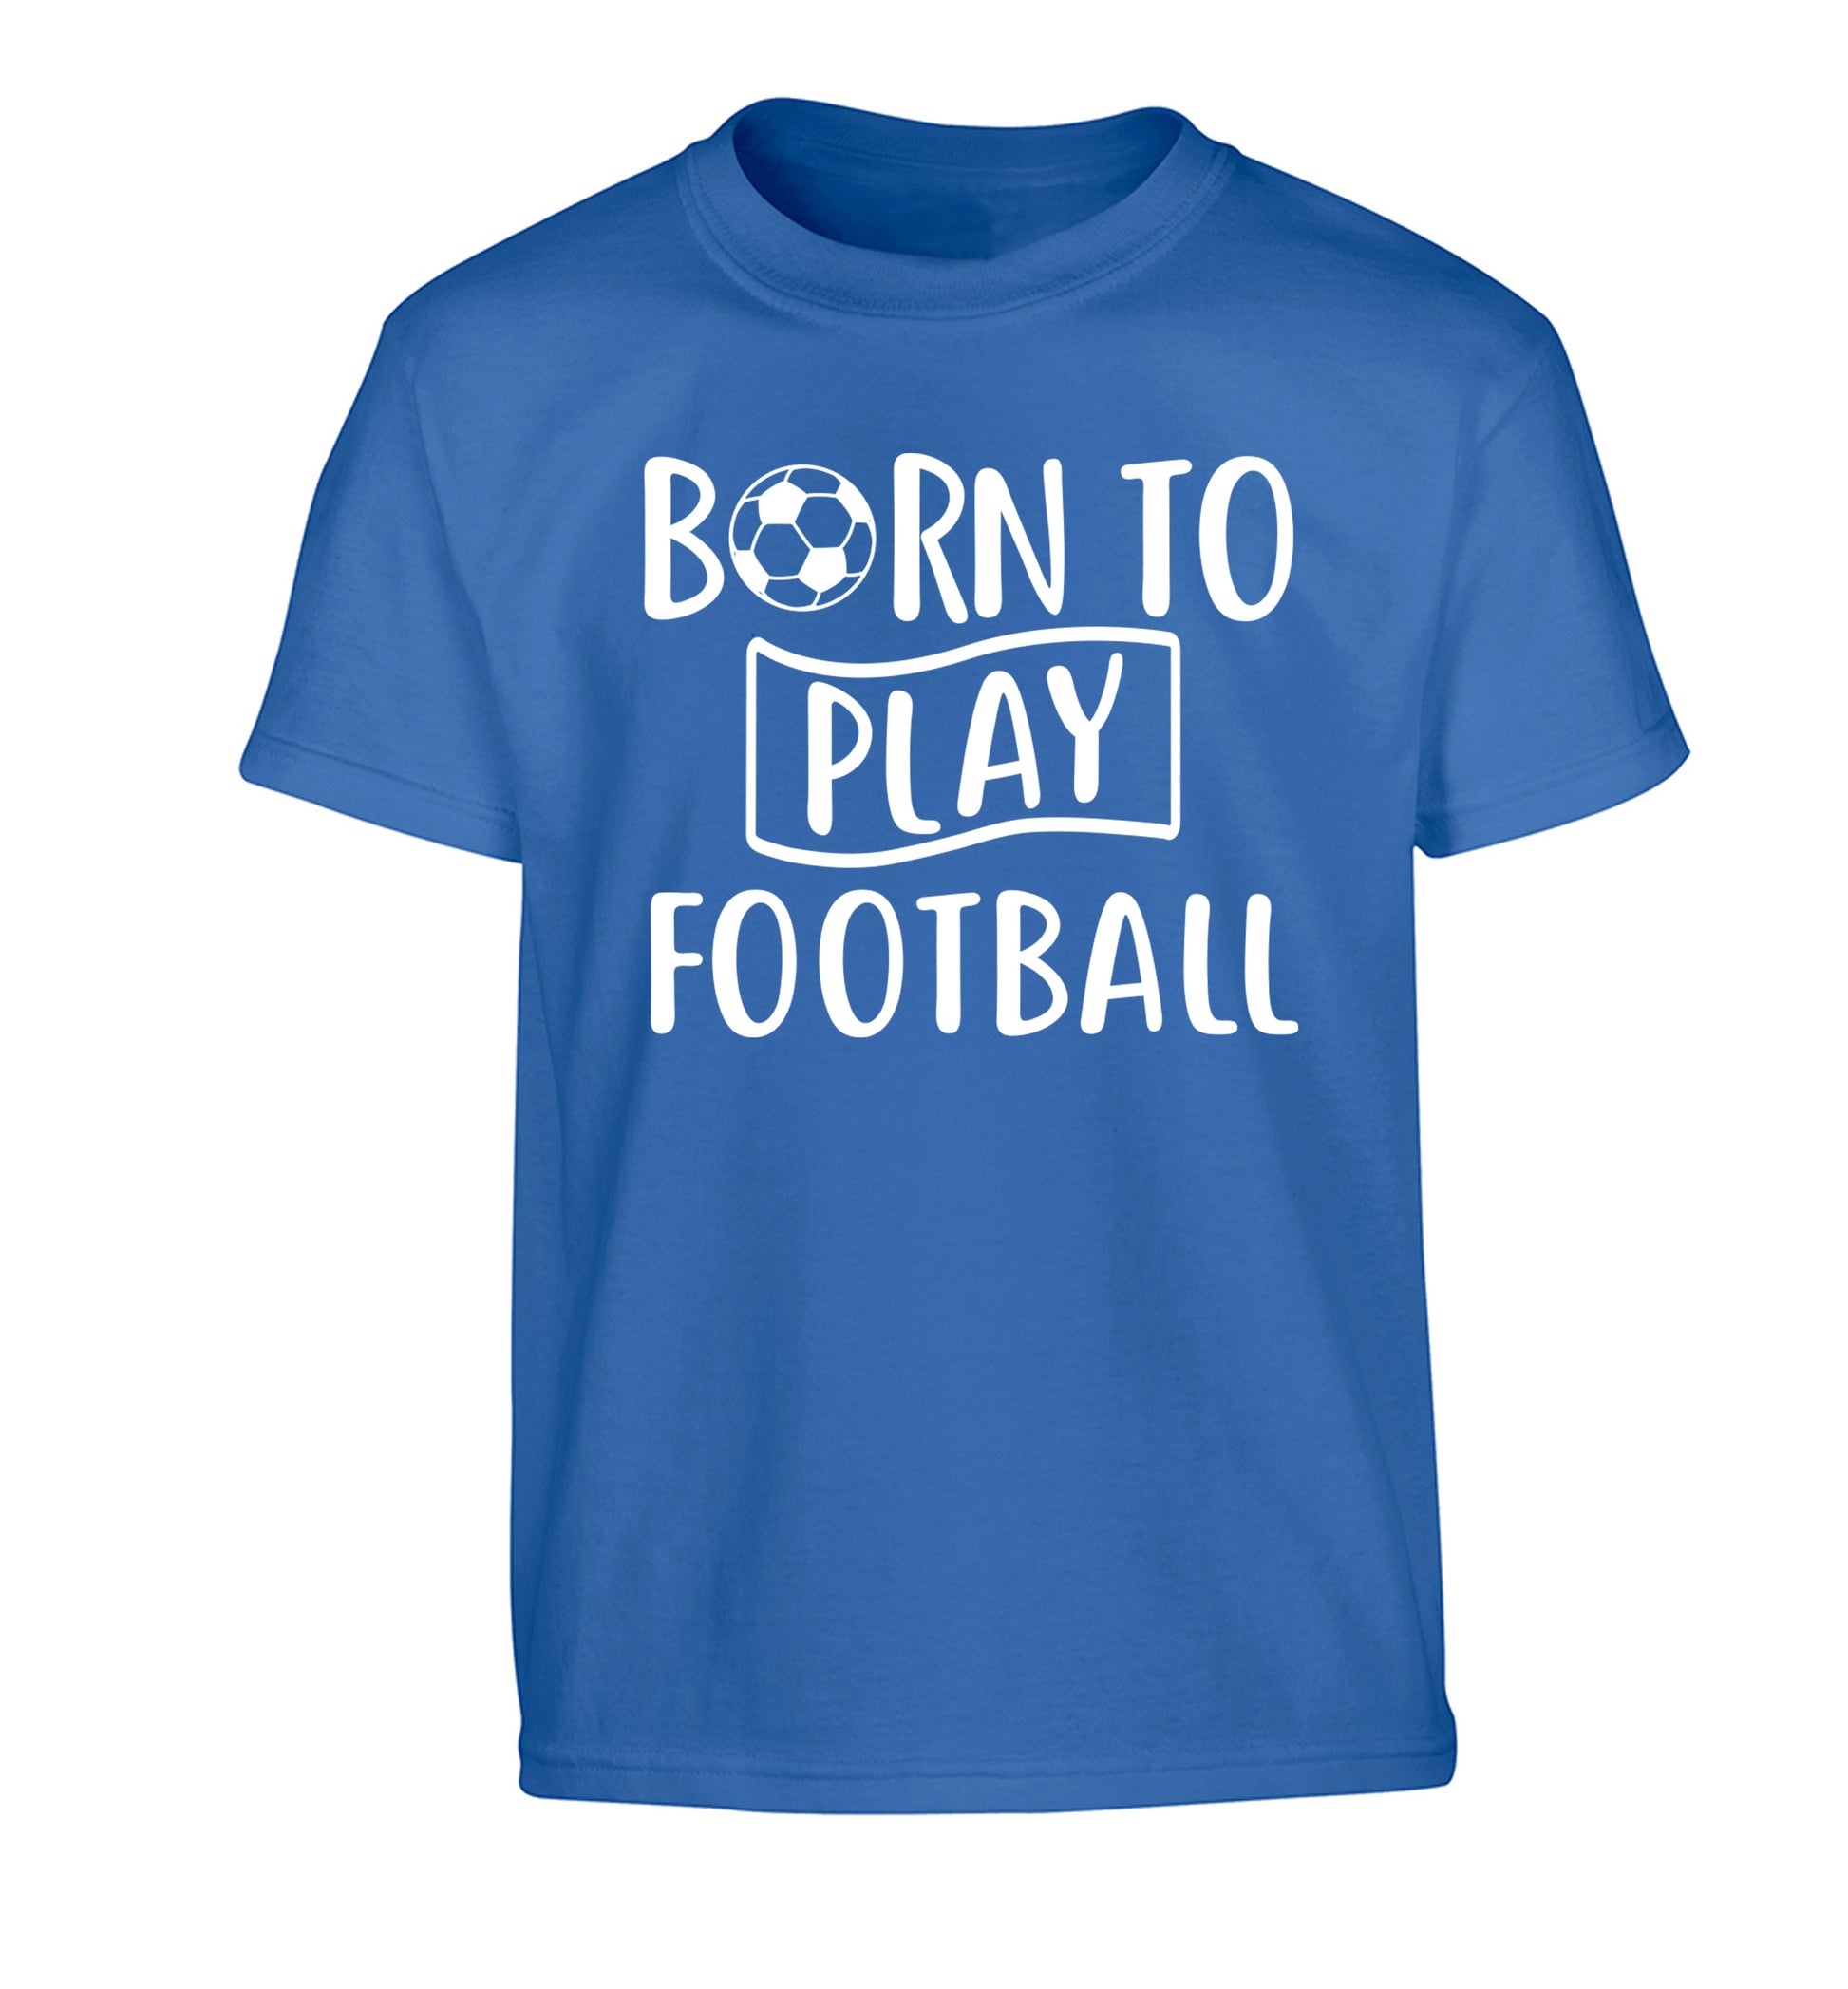 Born to play football Children's blue Tshirt 12-14 Years